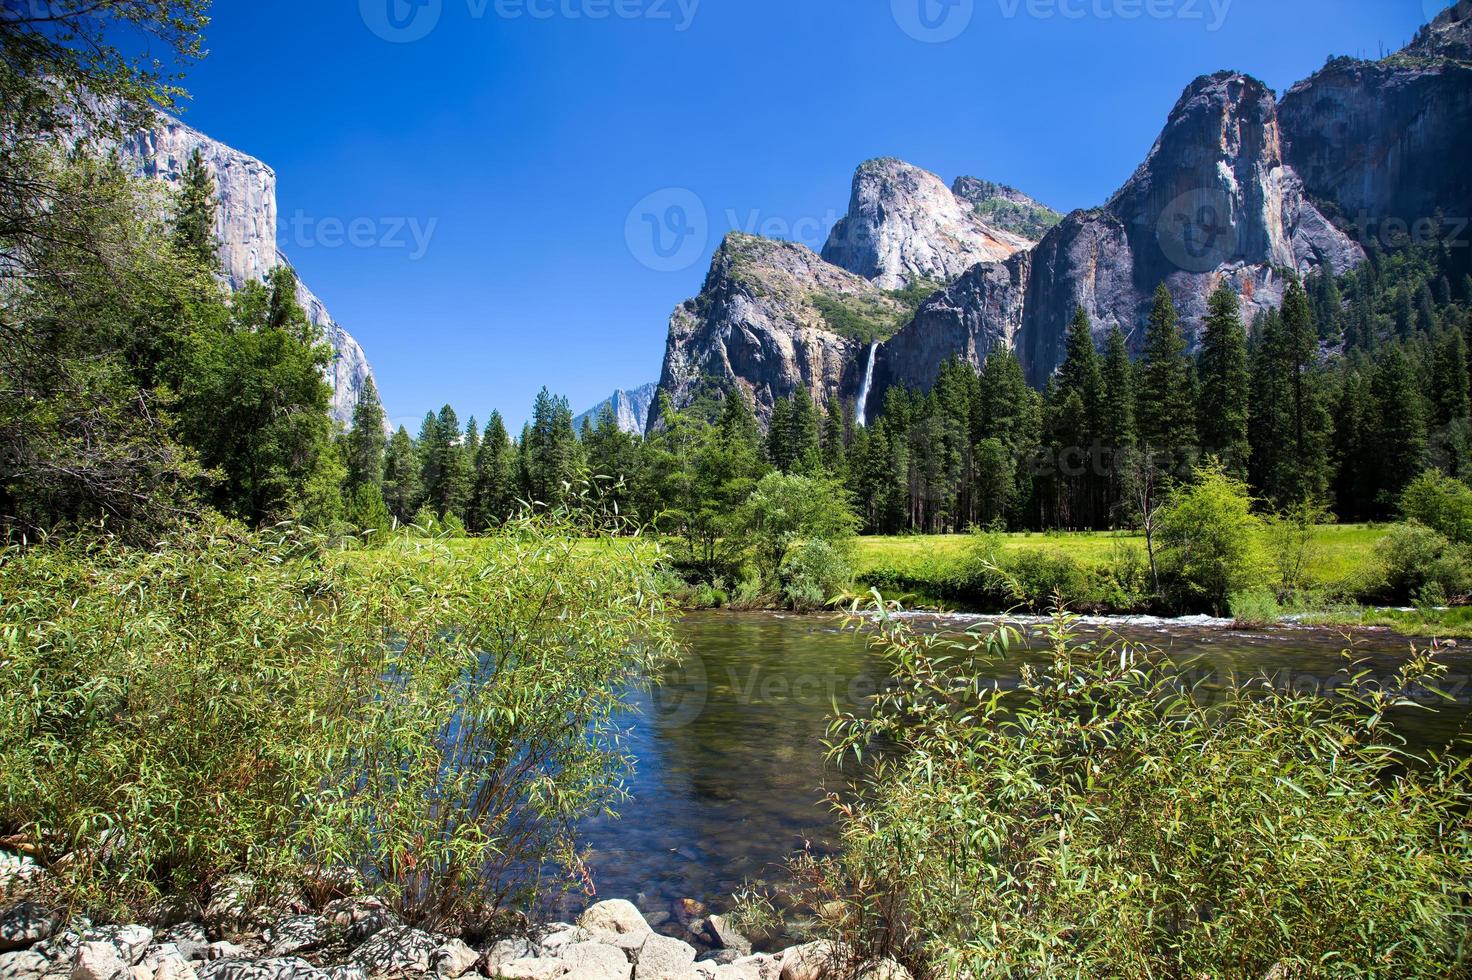 Yosemite landschap in de zomer foto